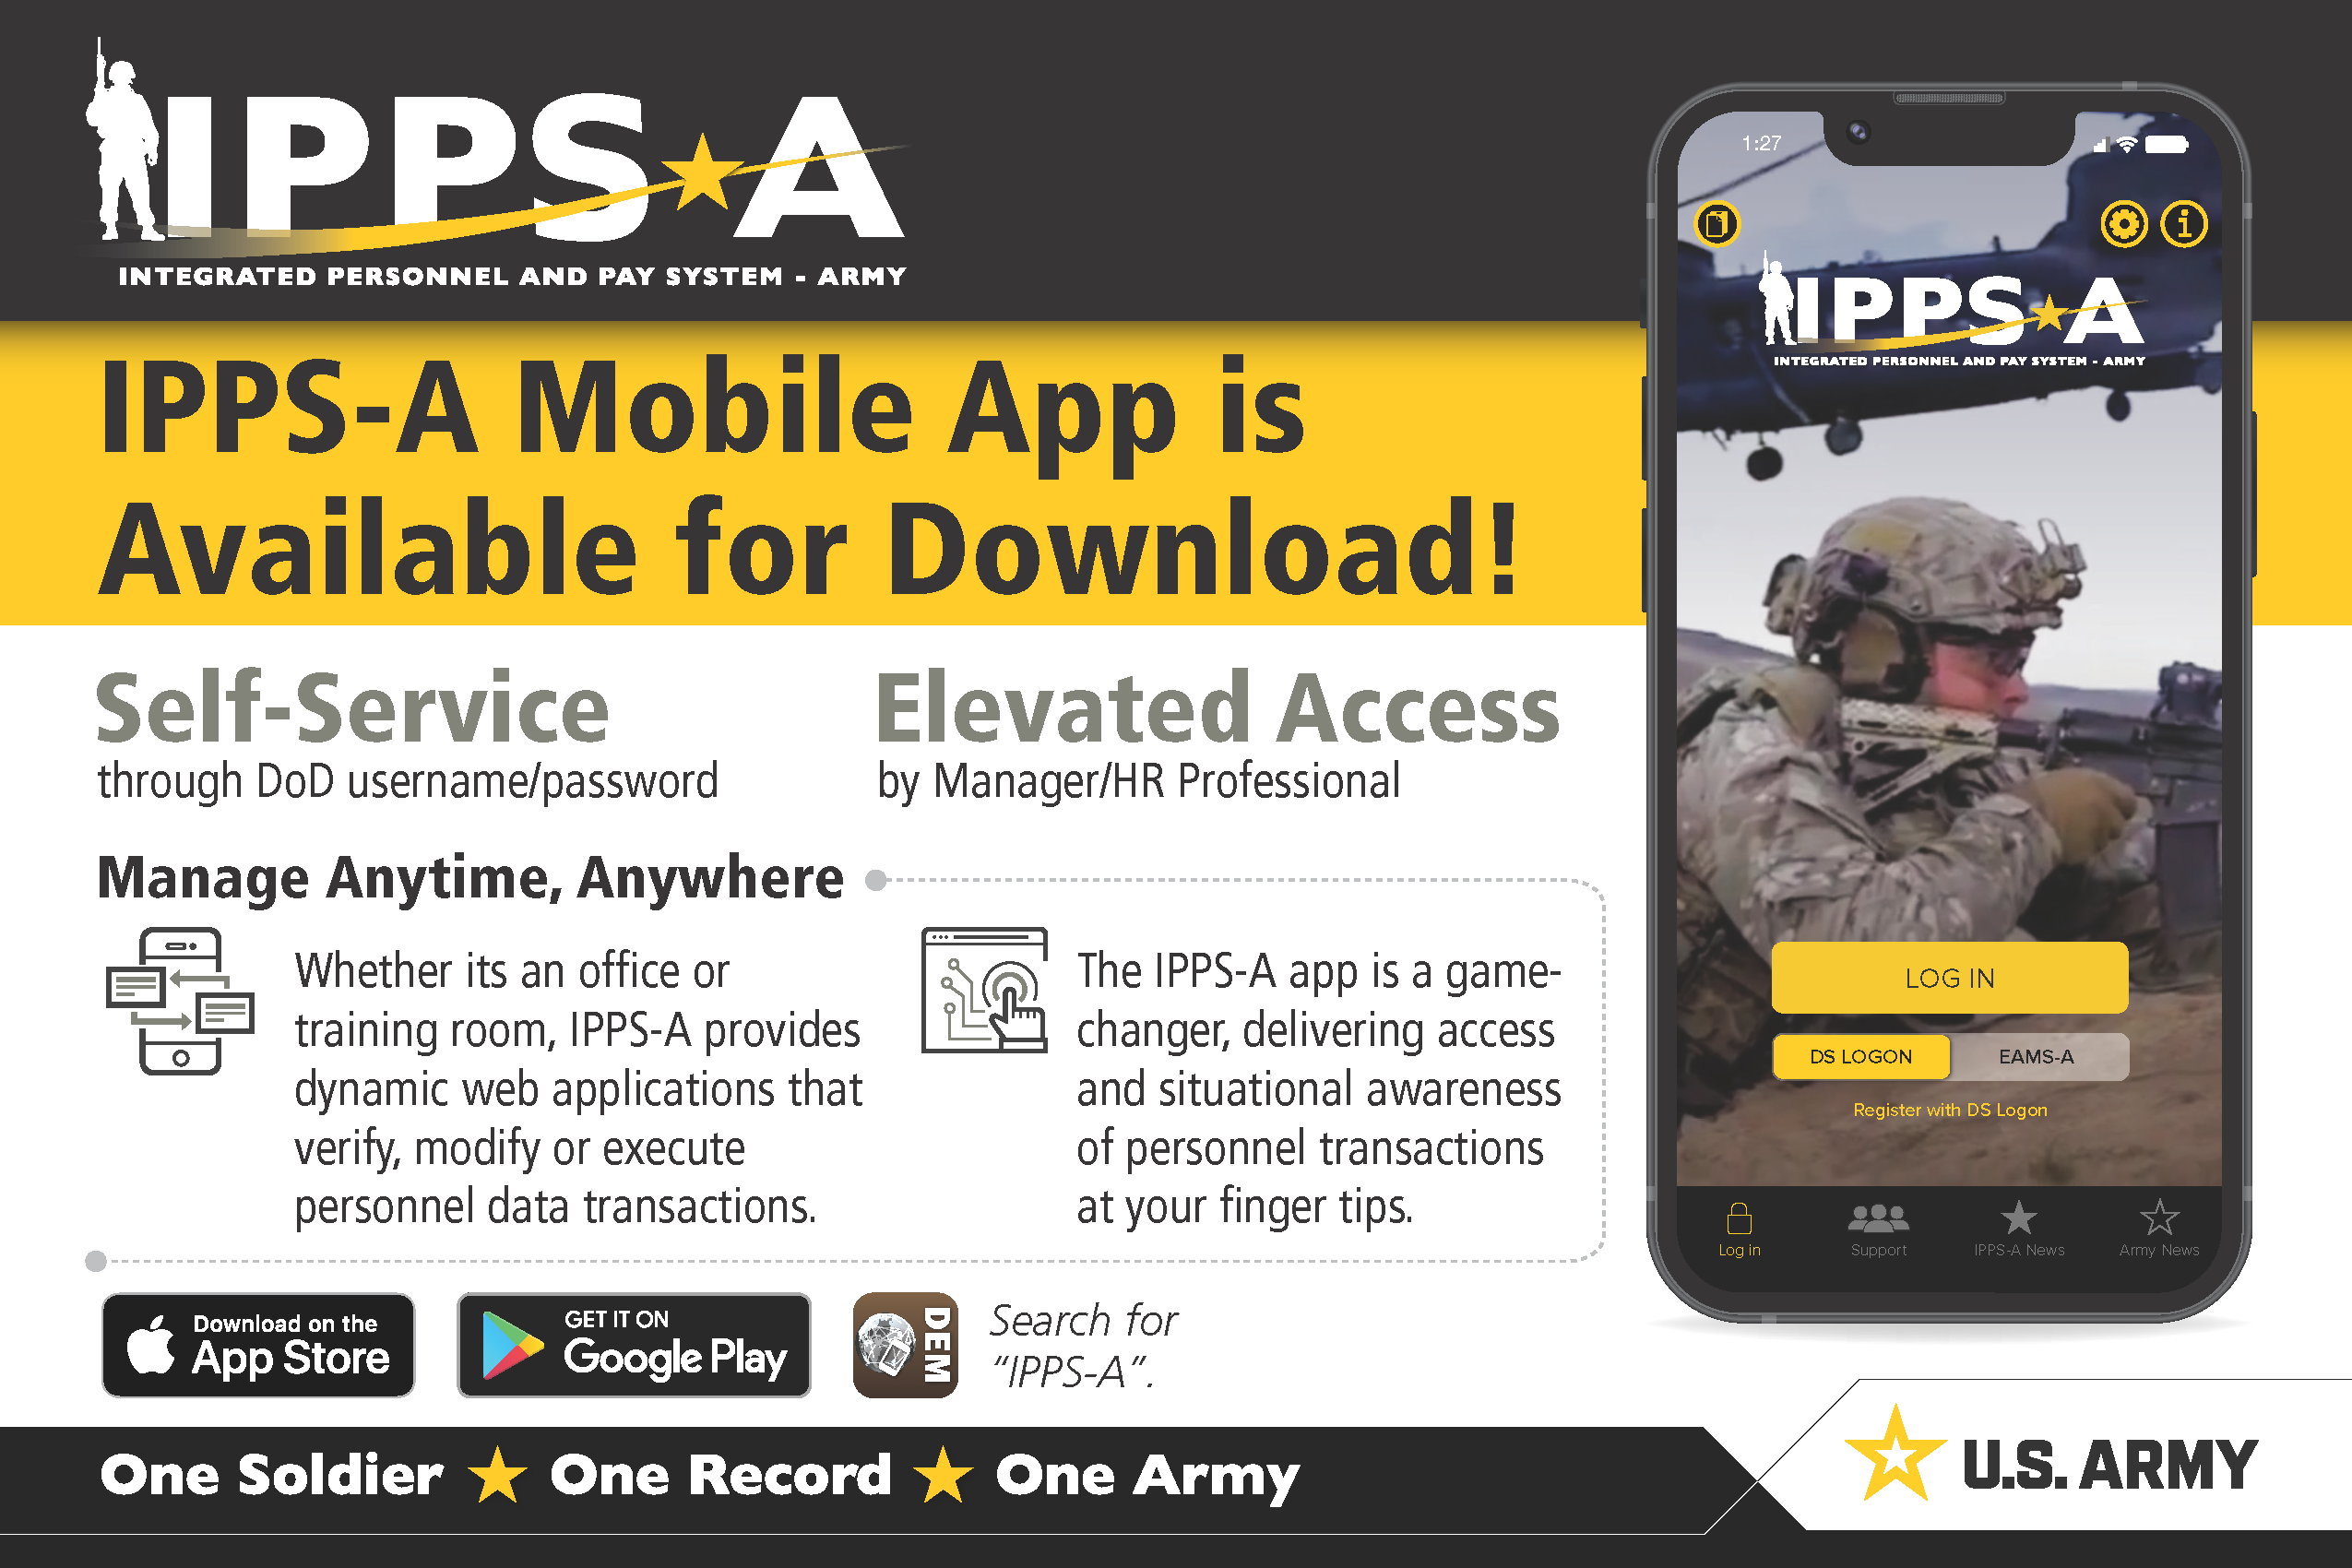 IPPS-A mobile app download instructions handout